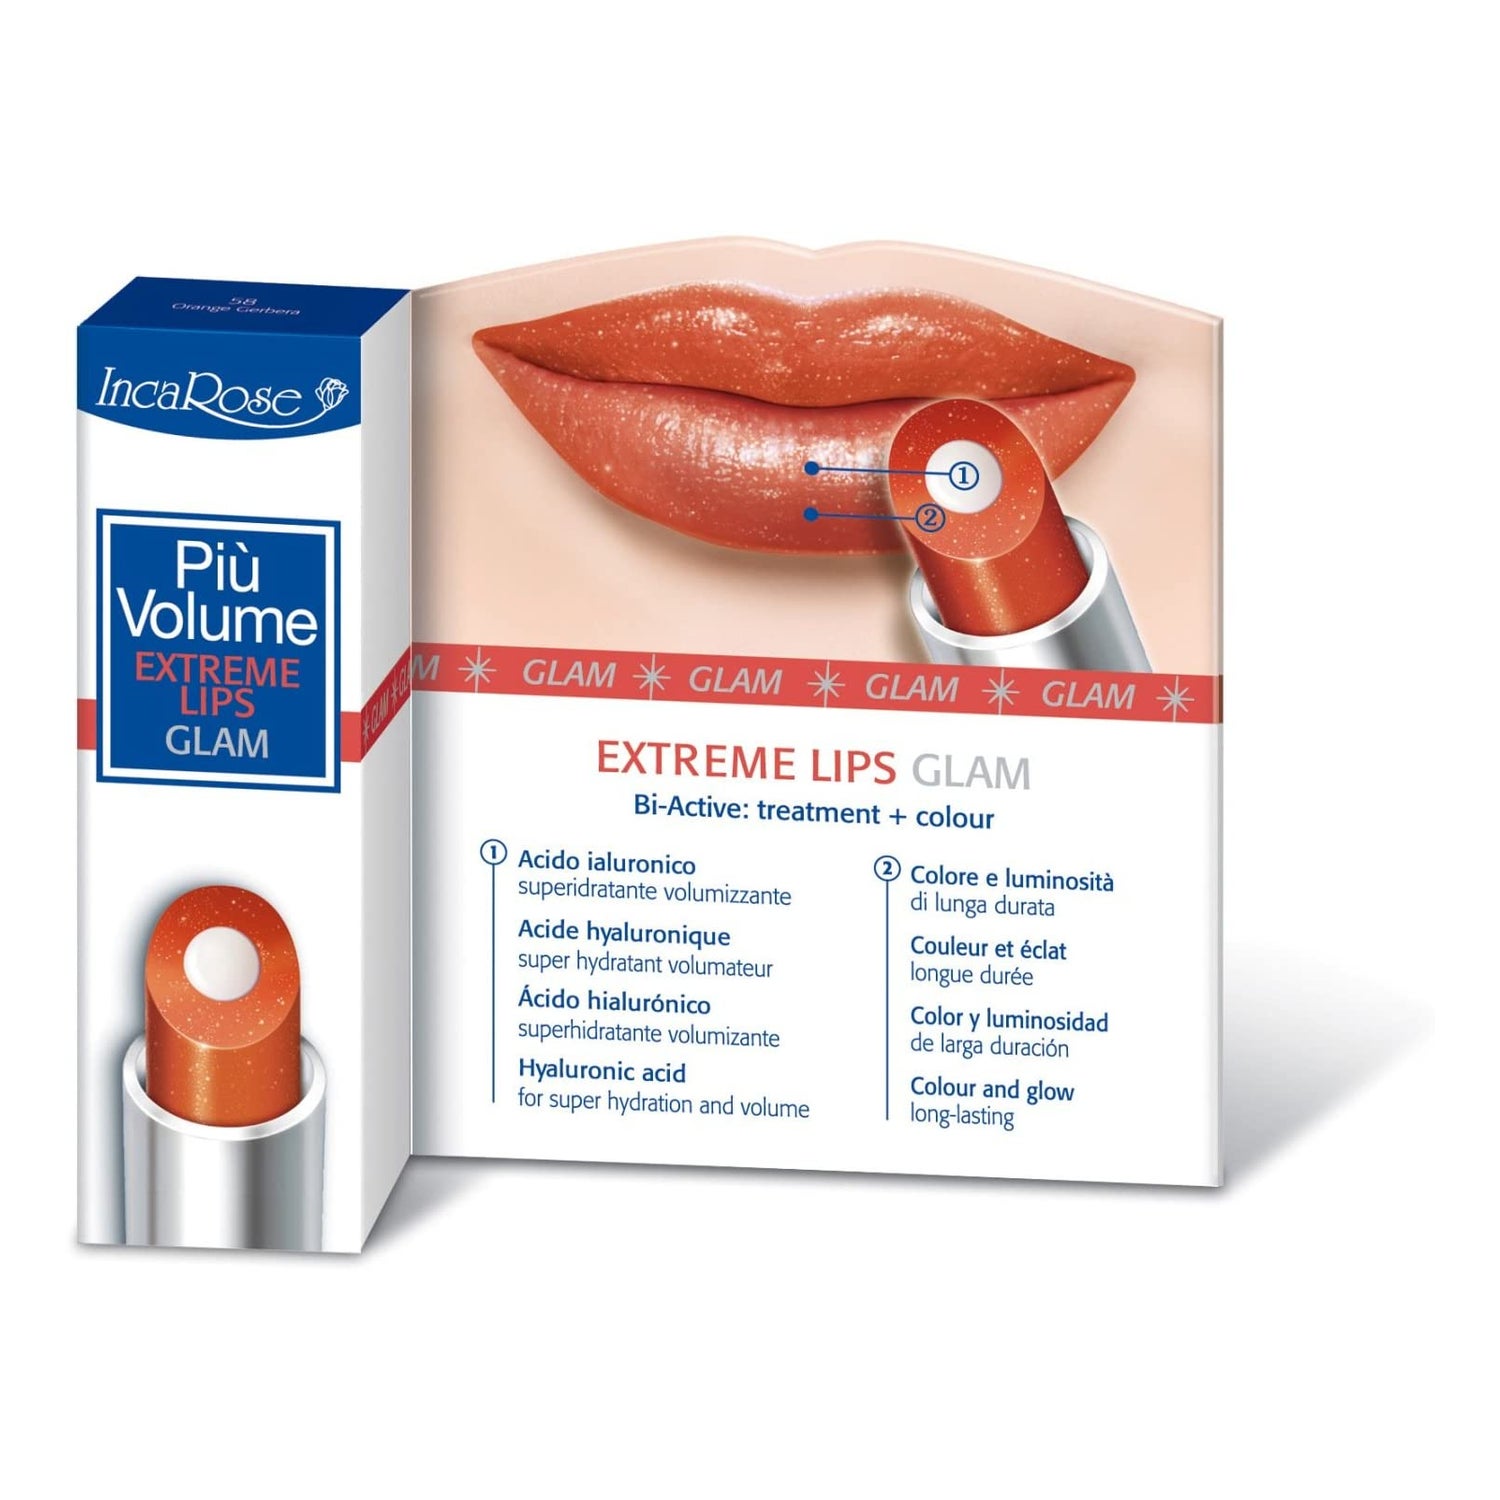 Image of Extreme Lips Balm IncaRose Tonalità 56